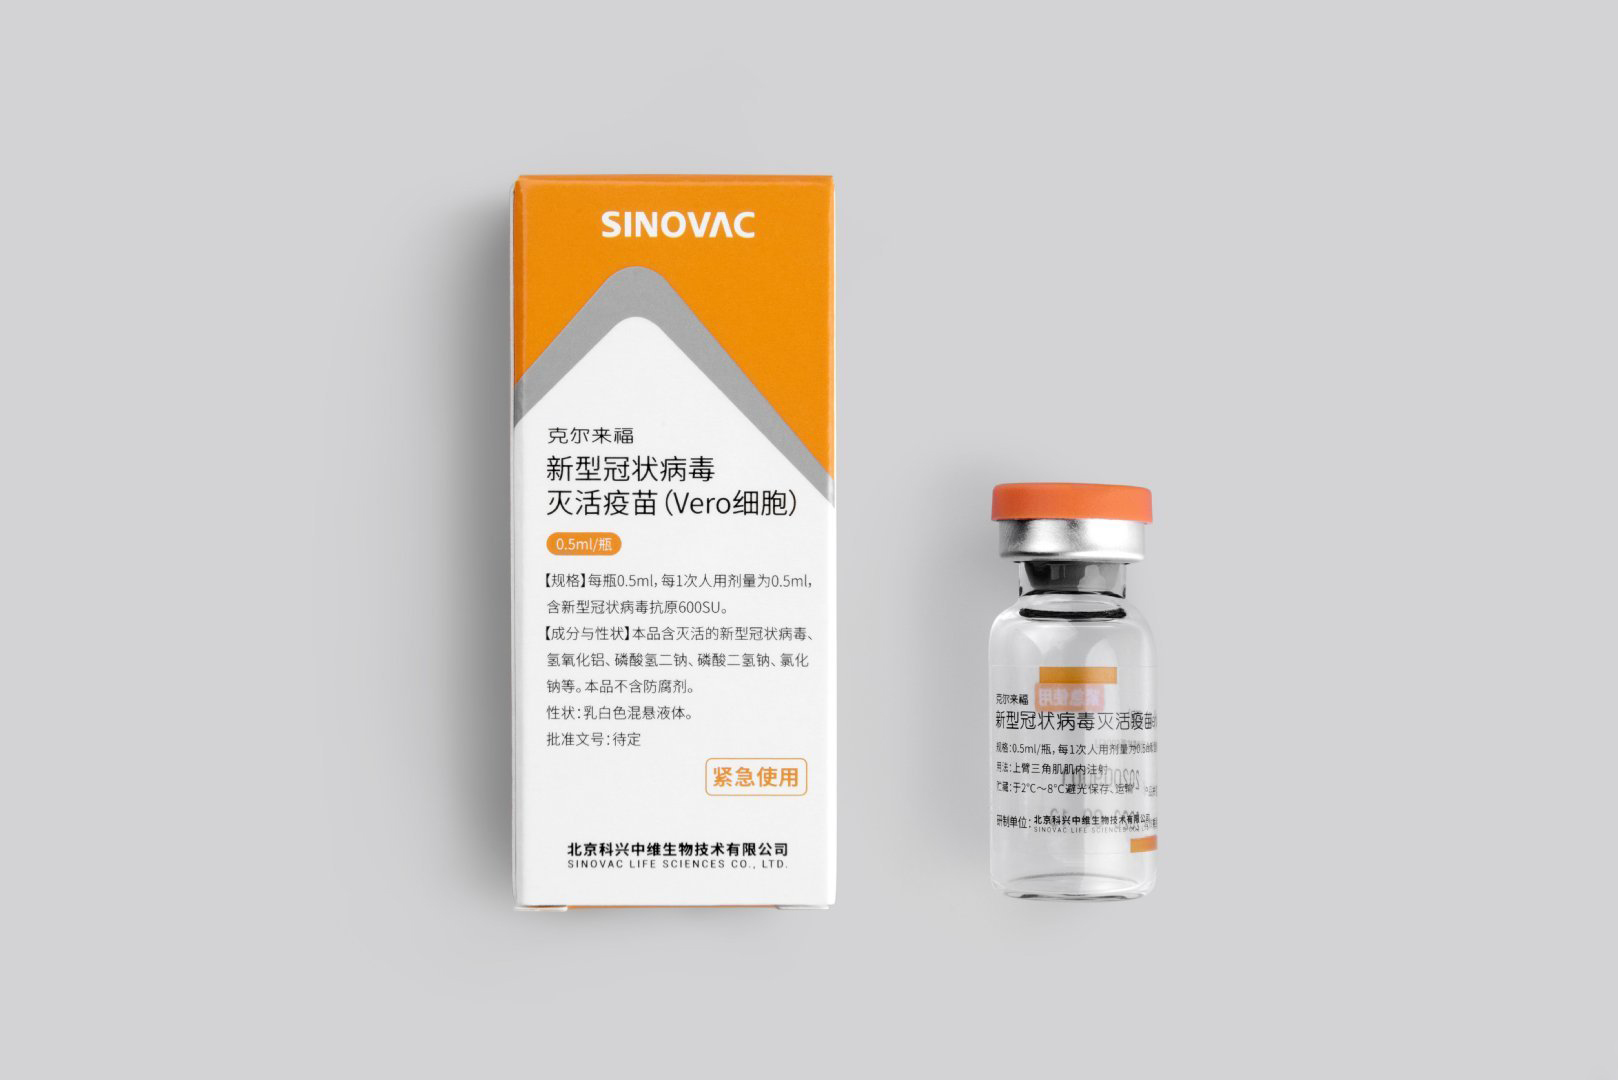 Sars 2 вакцина. Vero Cell вакцина. Covid-19 vaccine (Vero Cell). Covid-19 вакцина китайская. Coronavac — Sinovac (Китай).